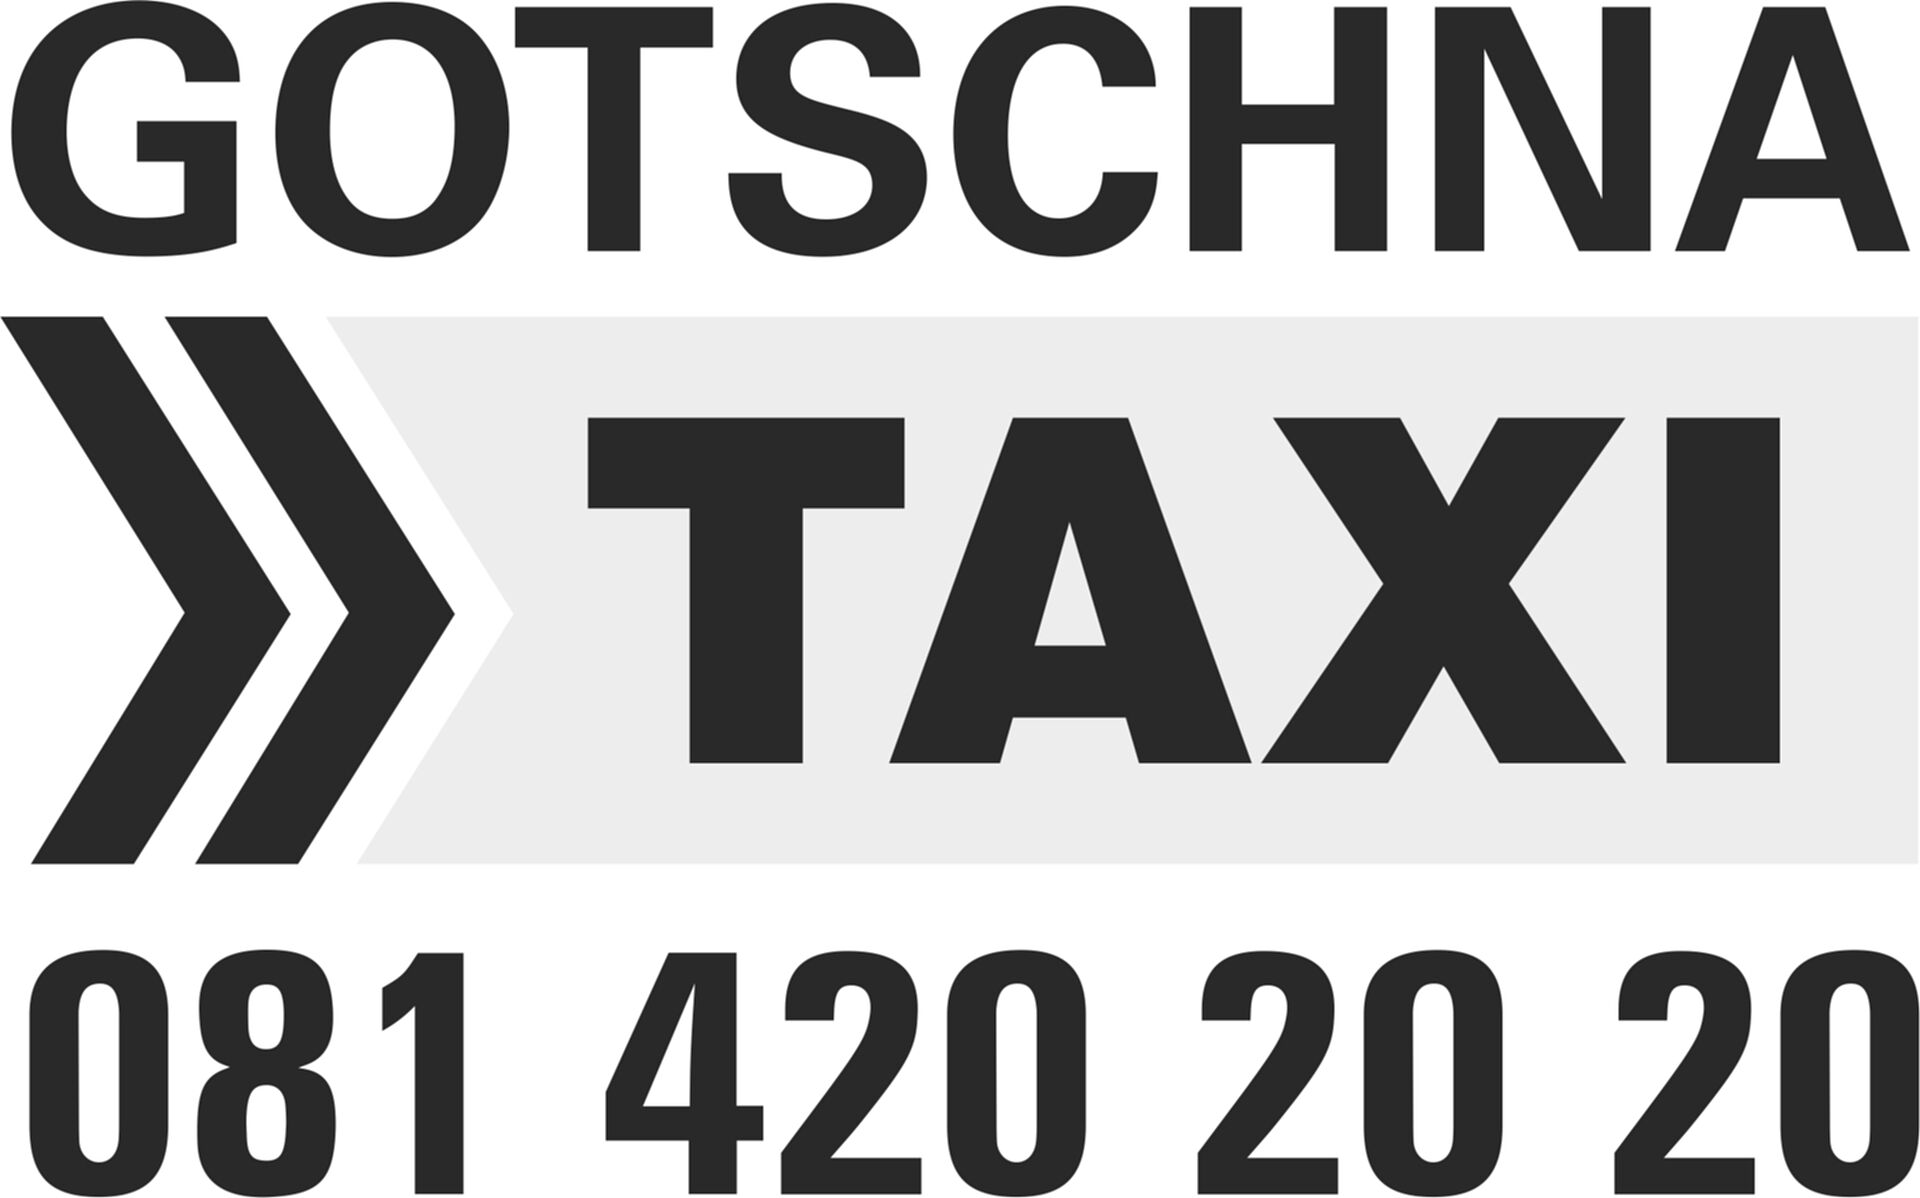 Logo Gotschna Taxi 